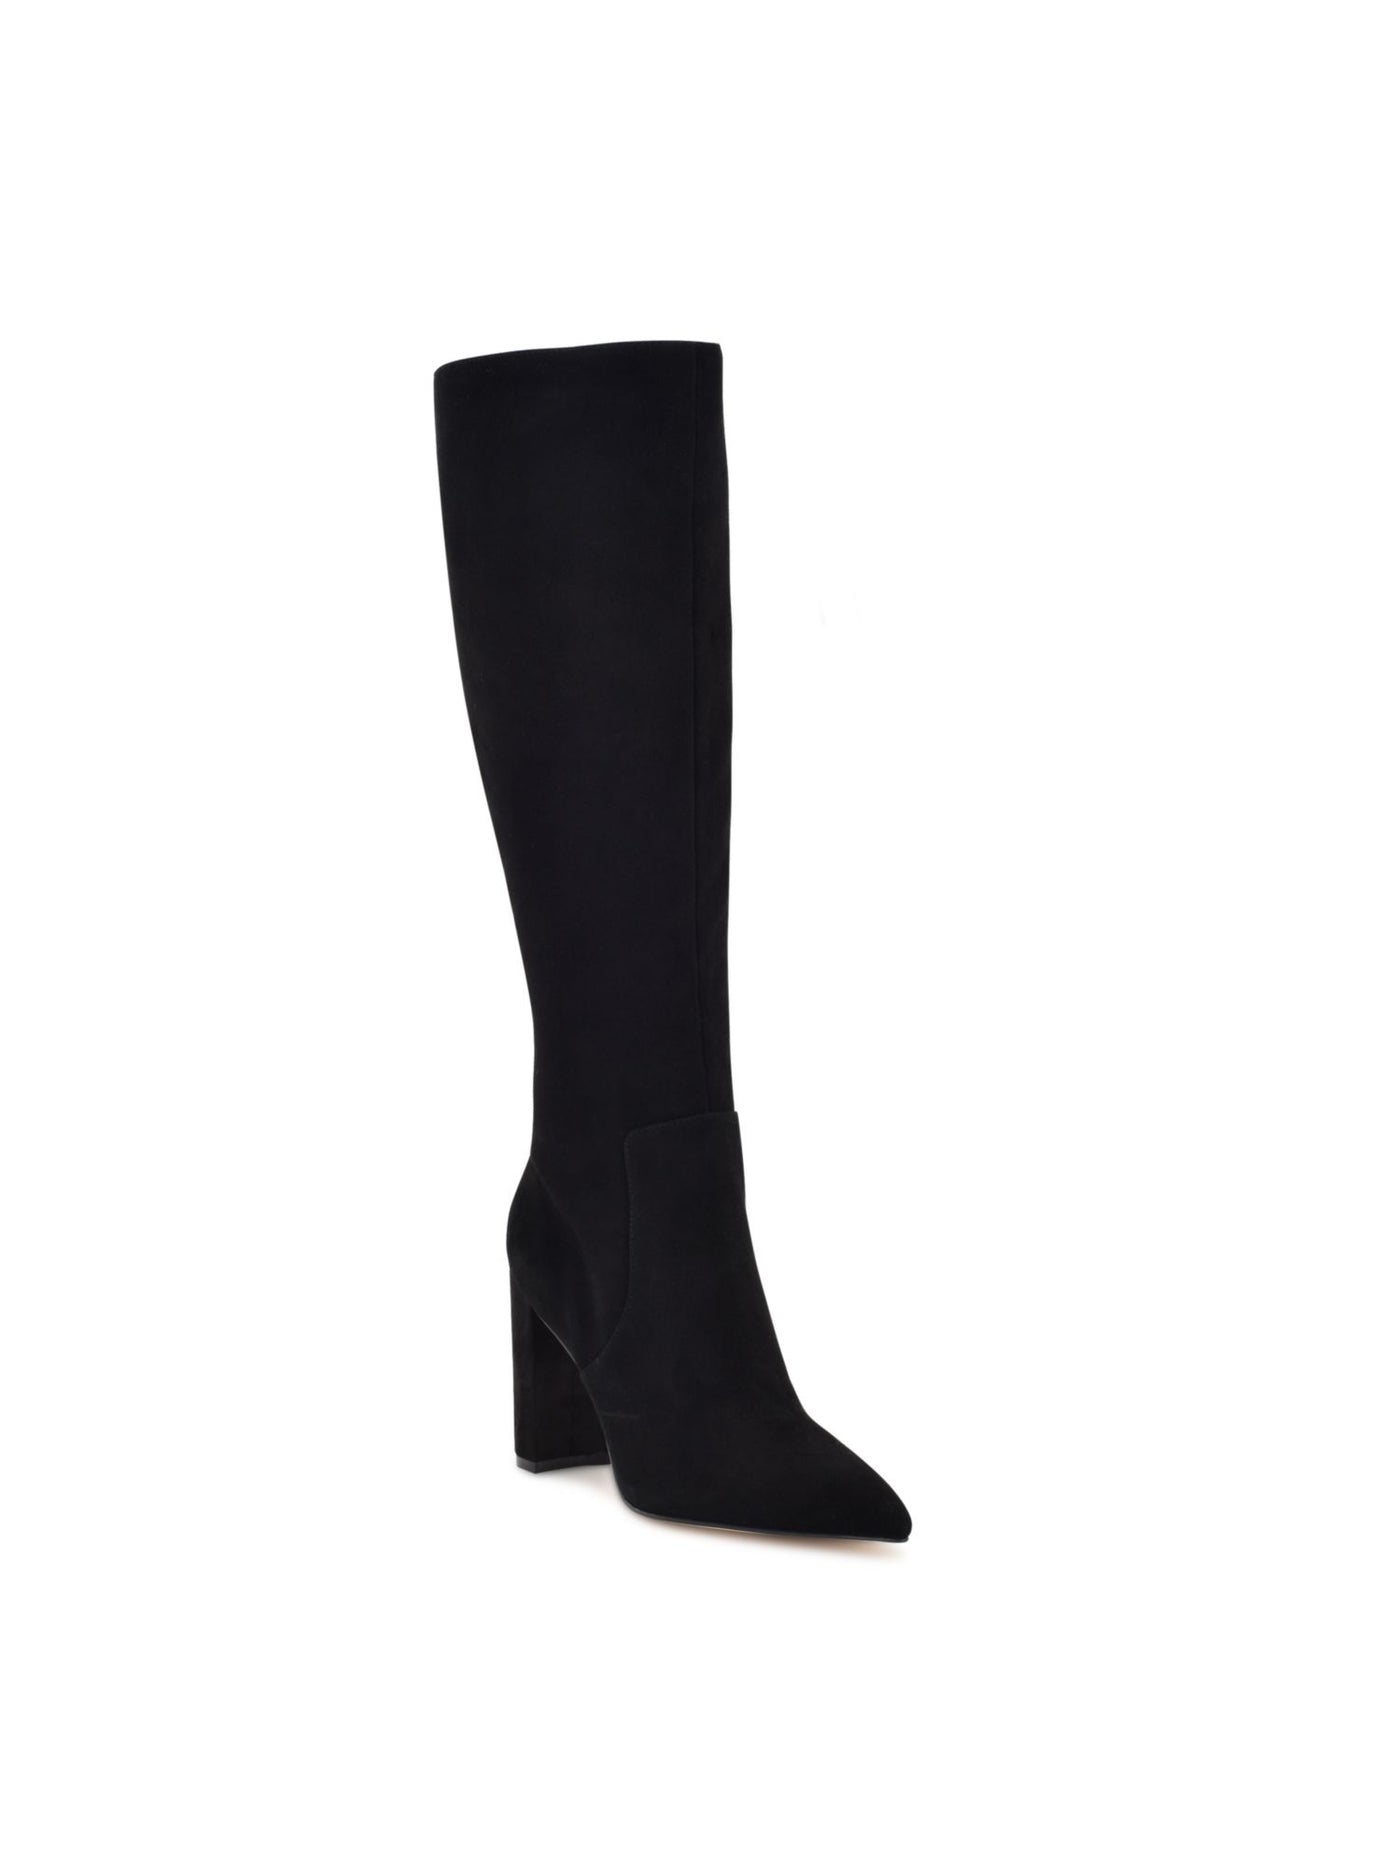 NINE WEST Womens Black Comfort Danee Pointed Toe Block Heel Zip-Up Leather Dress Boots 10 M